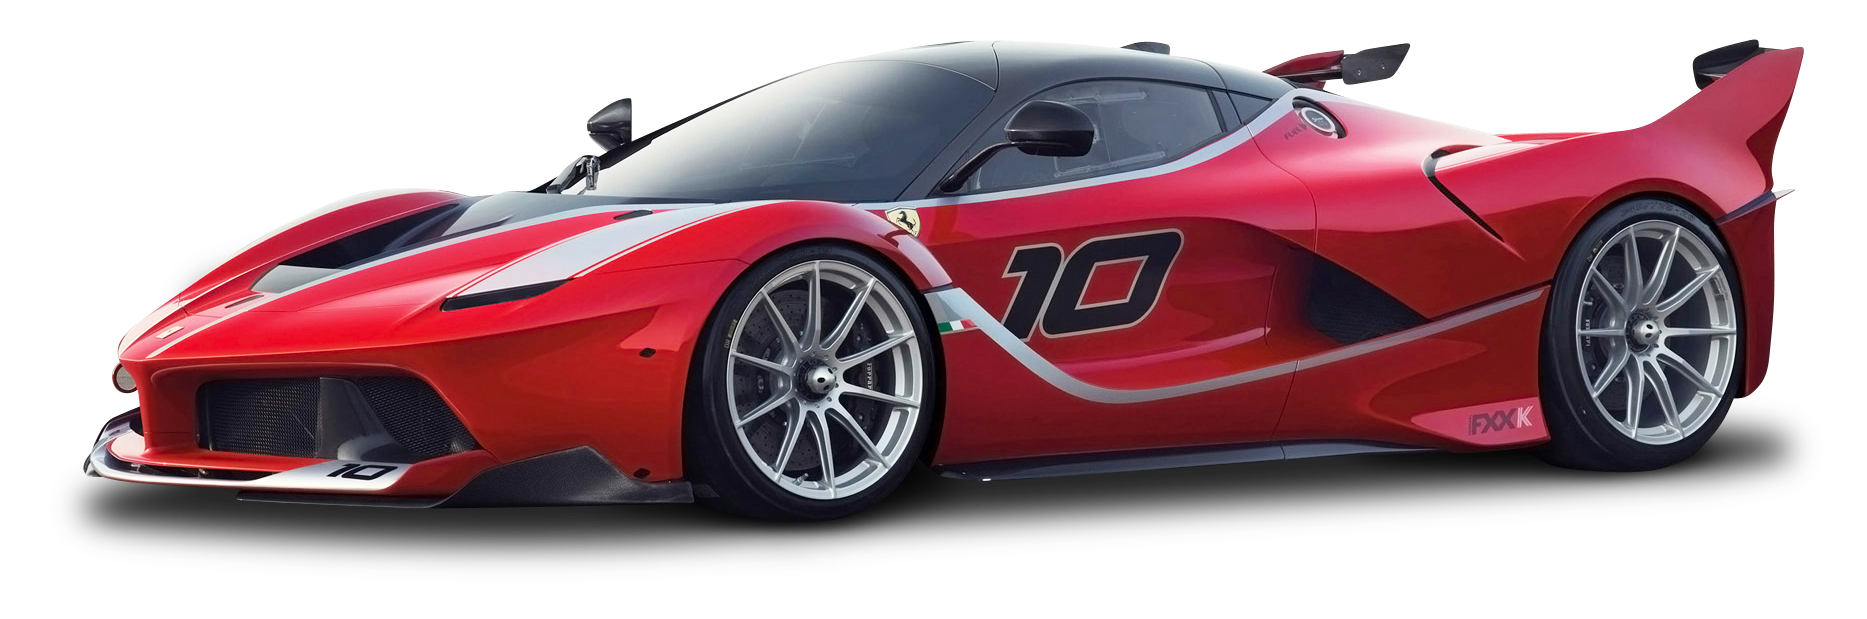 Ferrari FXX K Race Car PNG Image